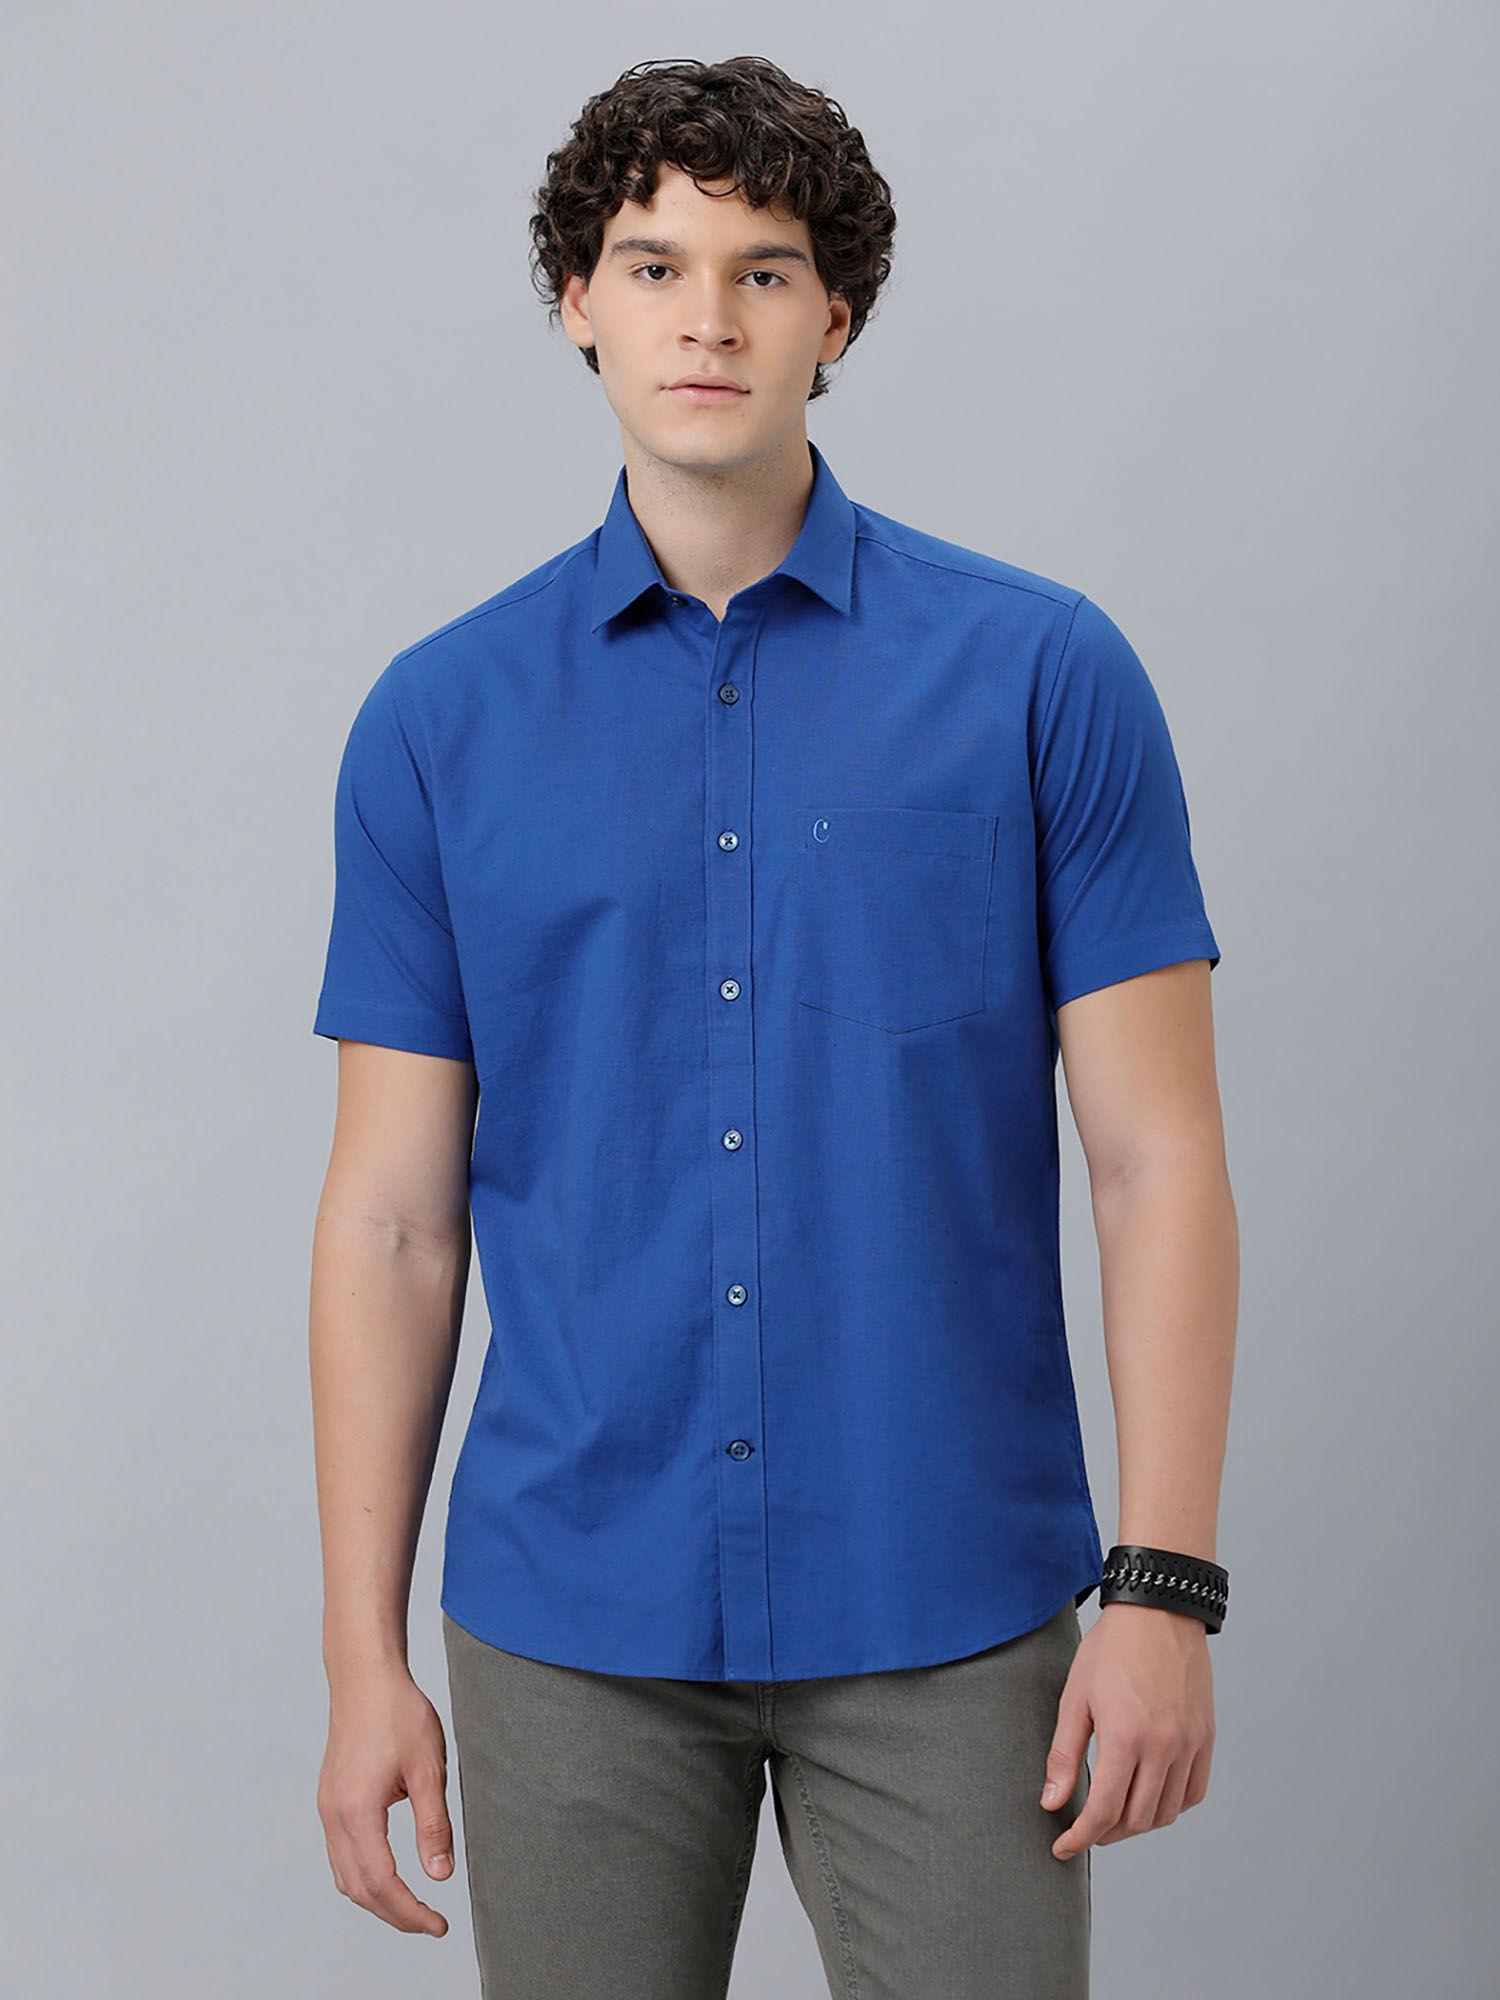 men's cotton linen blue solid slim fit half sleeve casual shirt